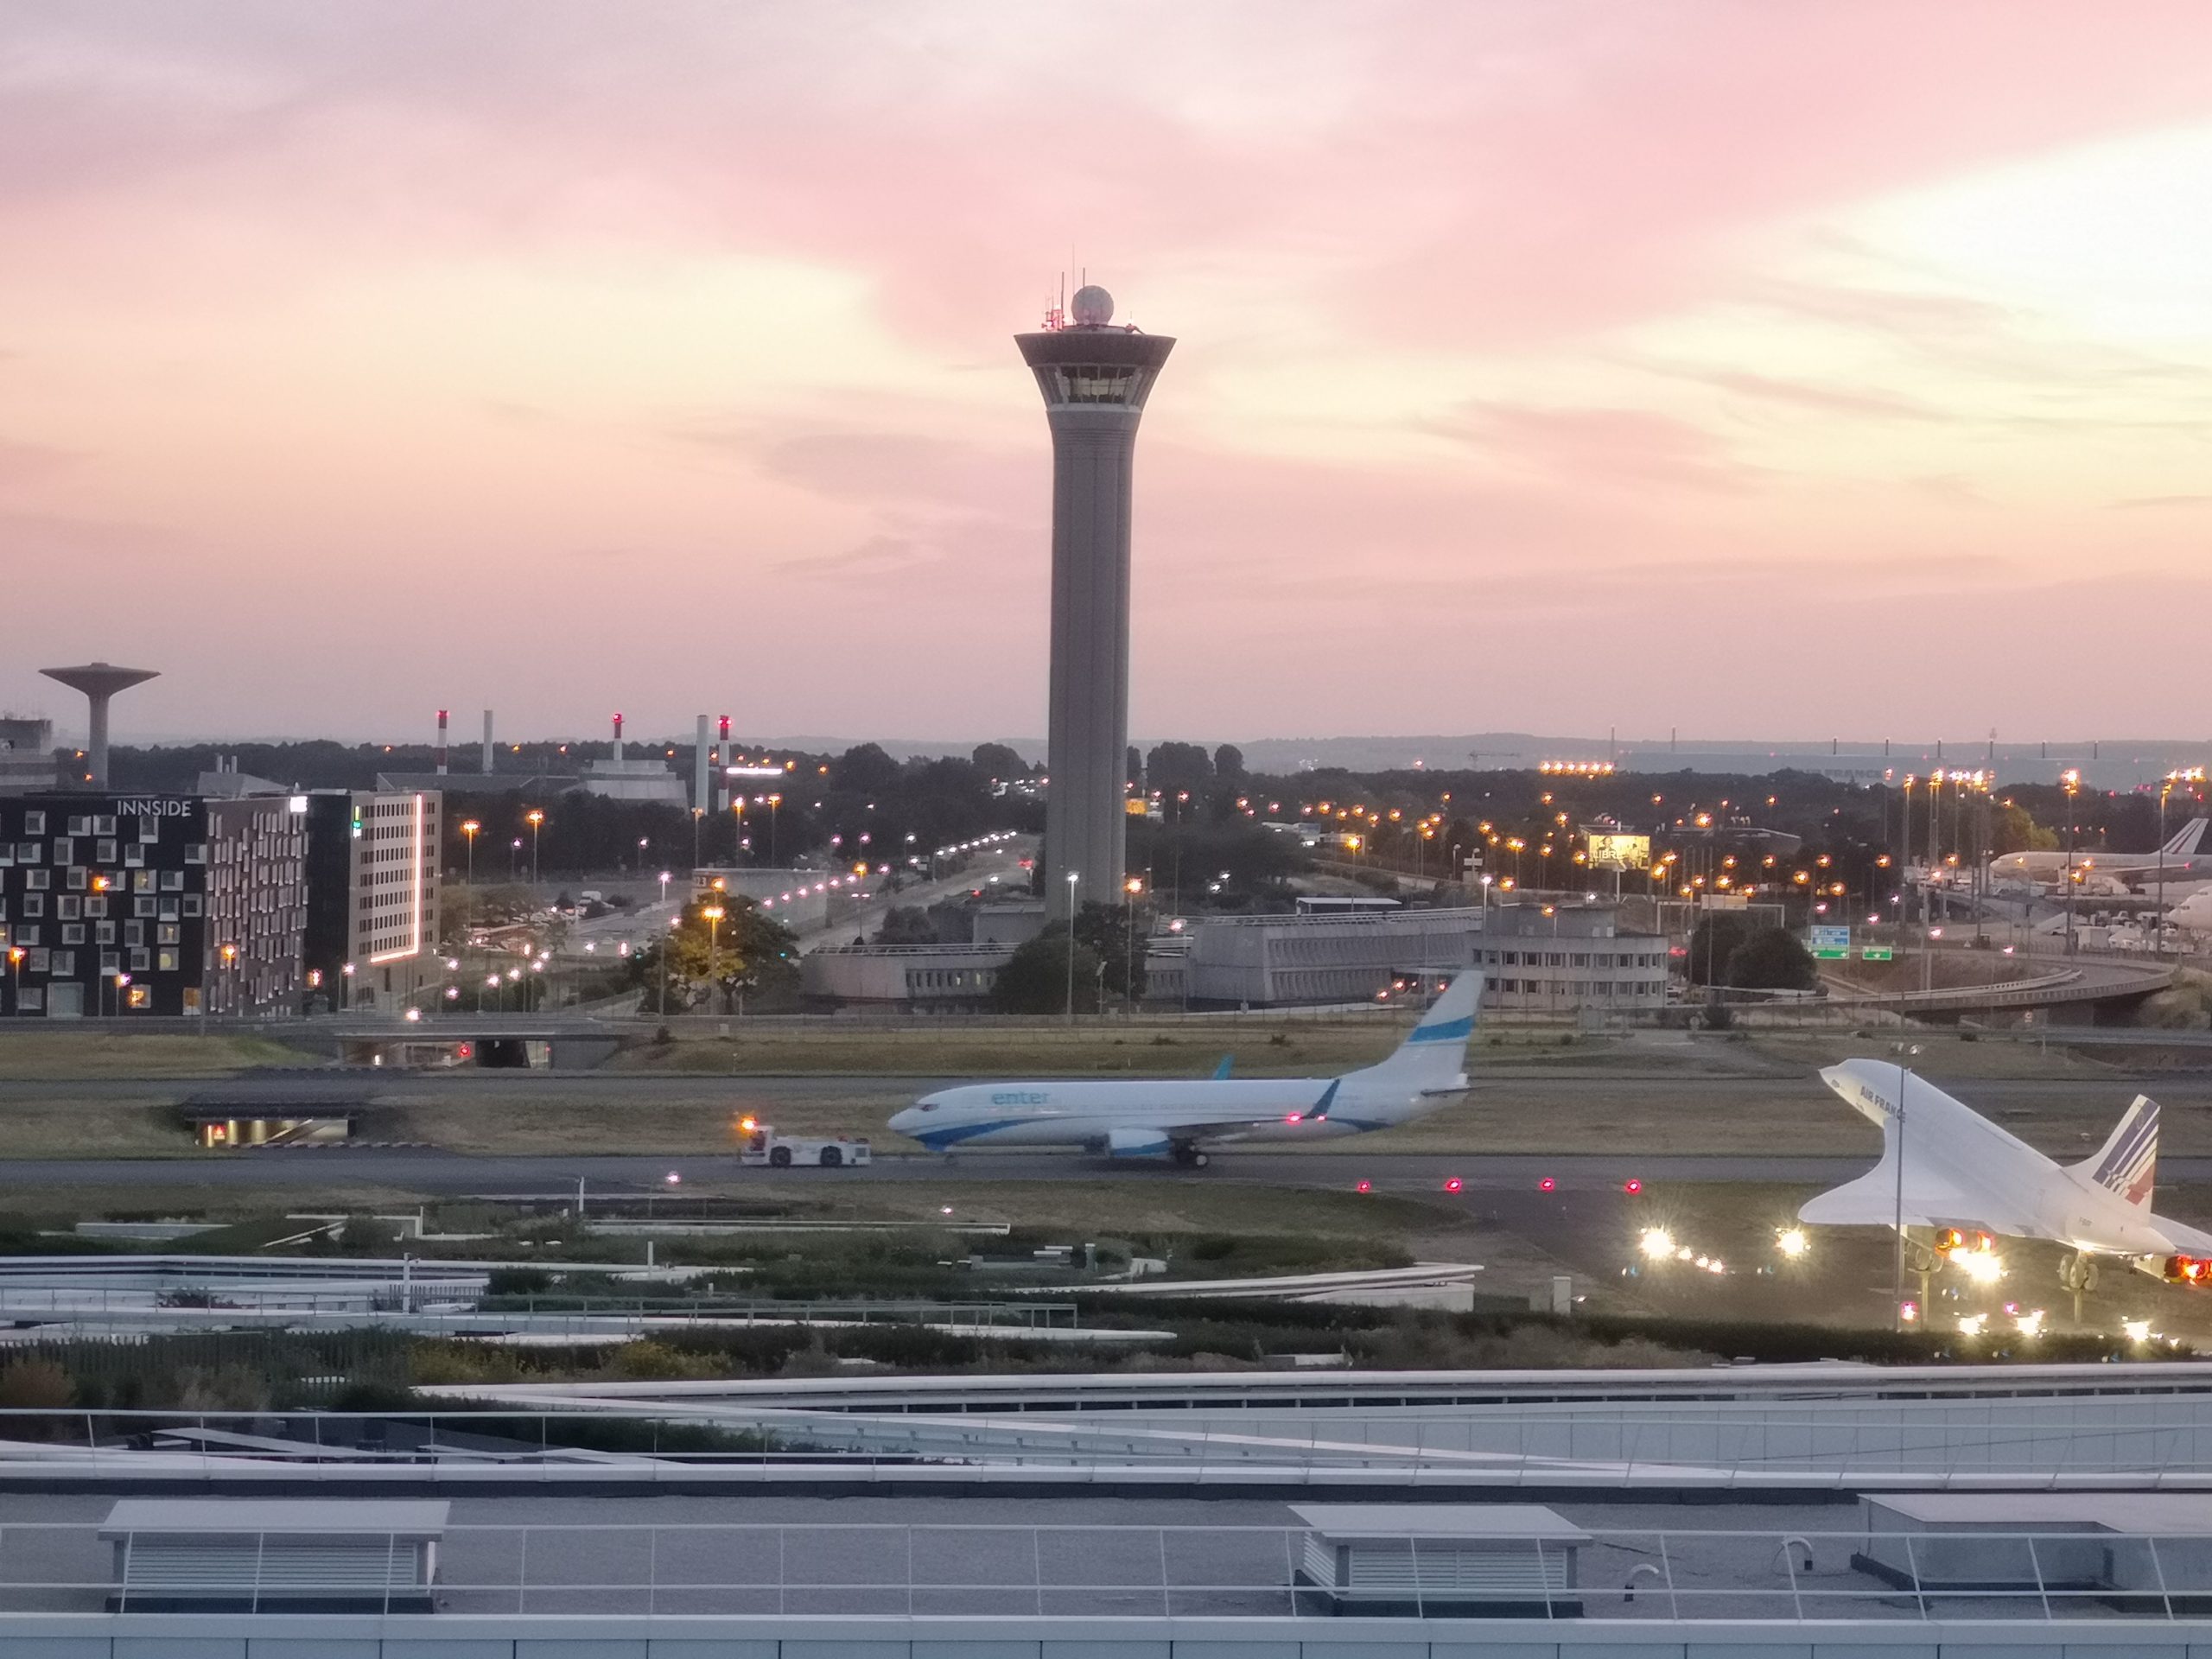 Airport review: Paris-Charles de Gaulle (CDG)